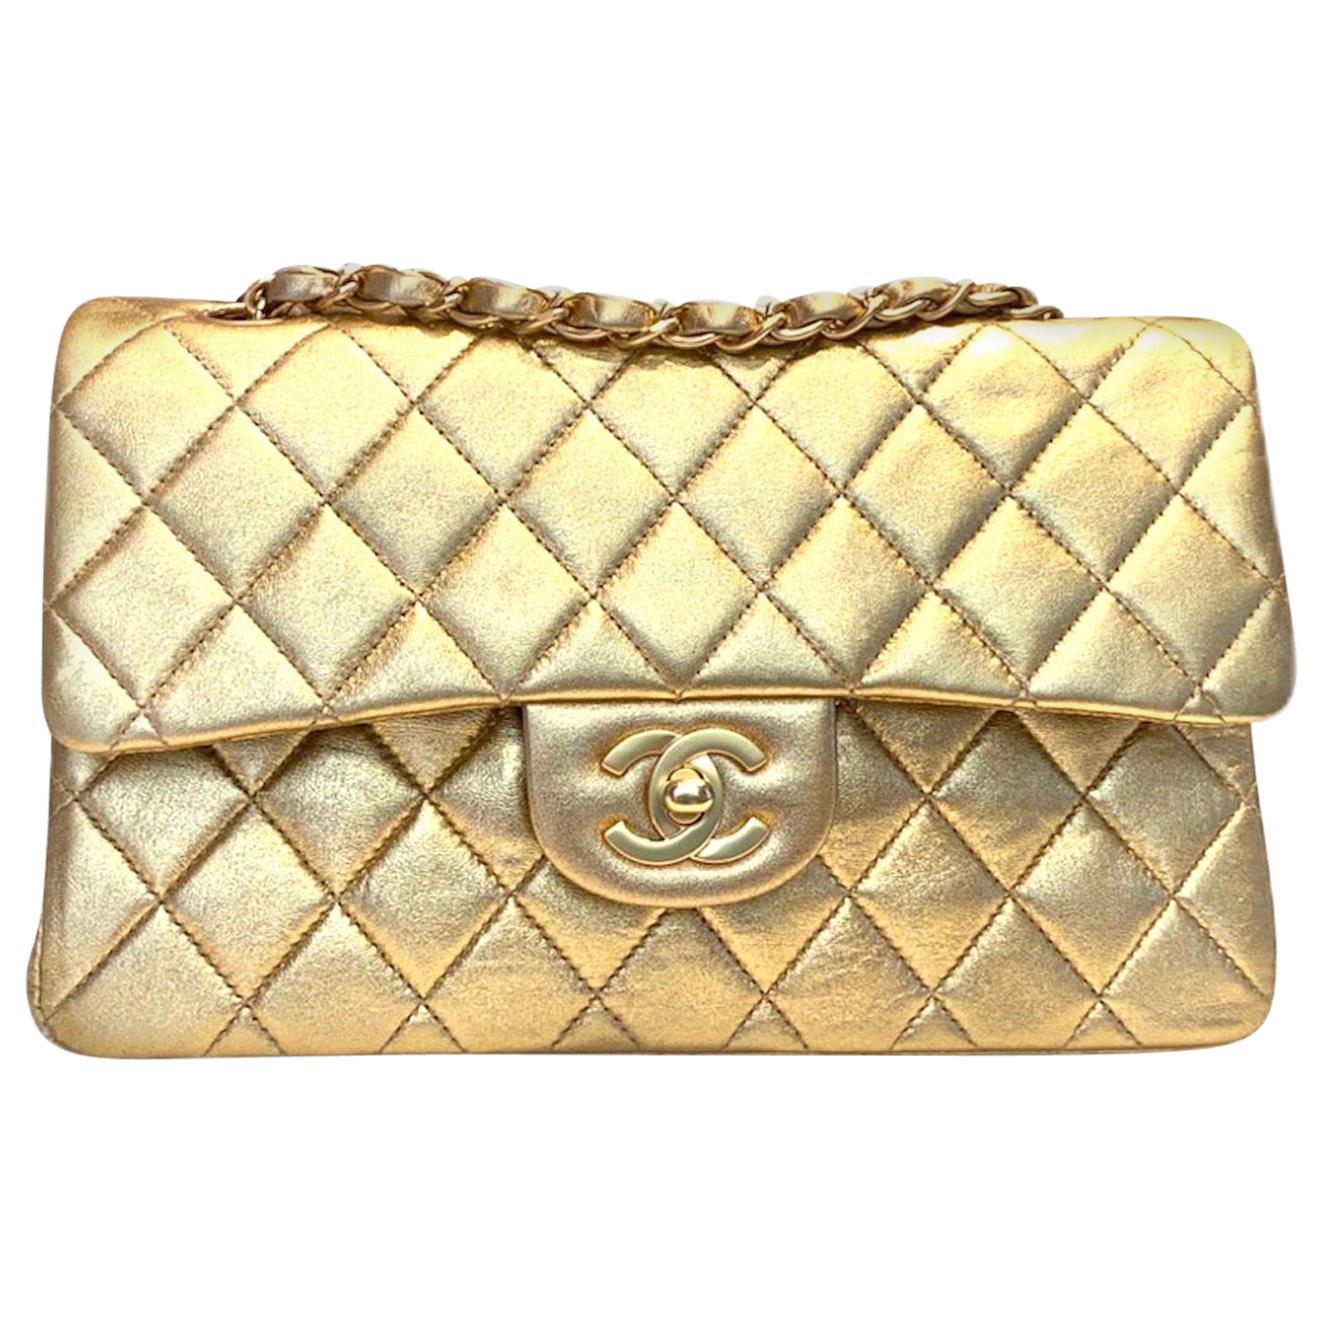 Chanel Classic Gold Bag